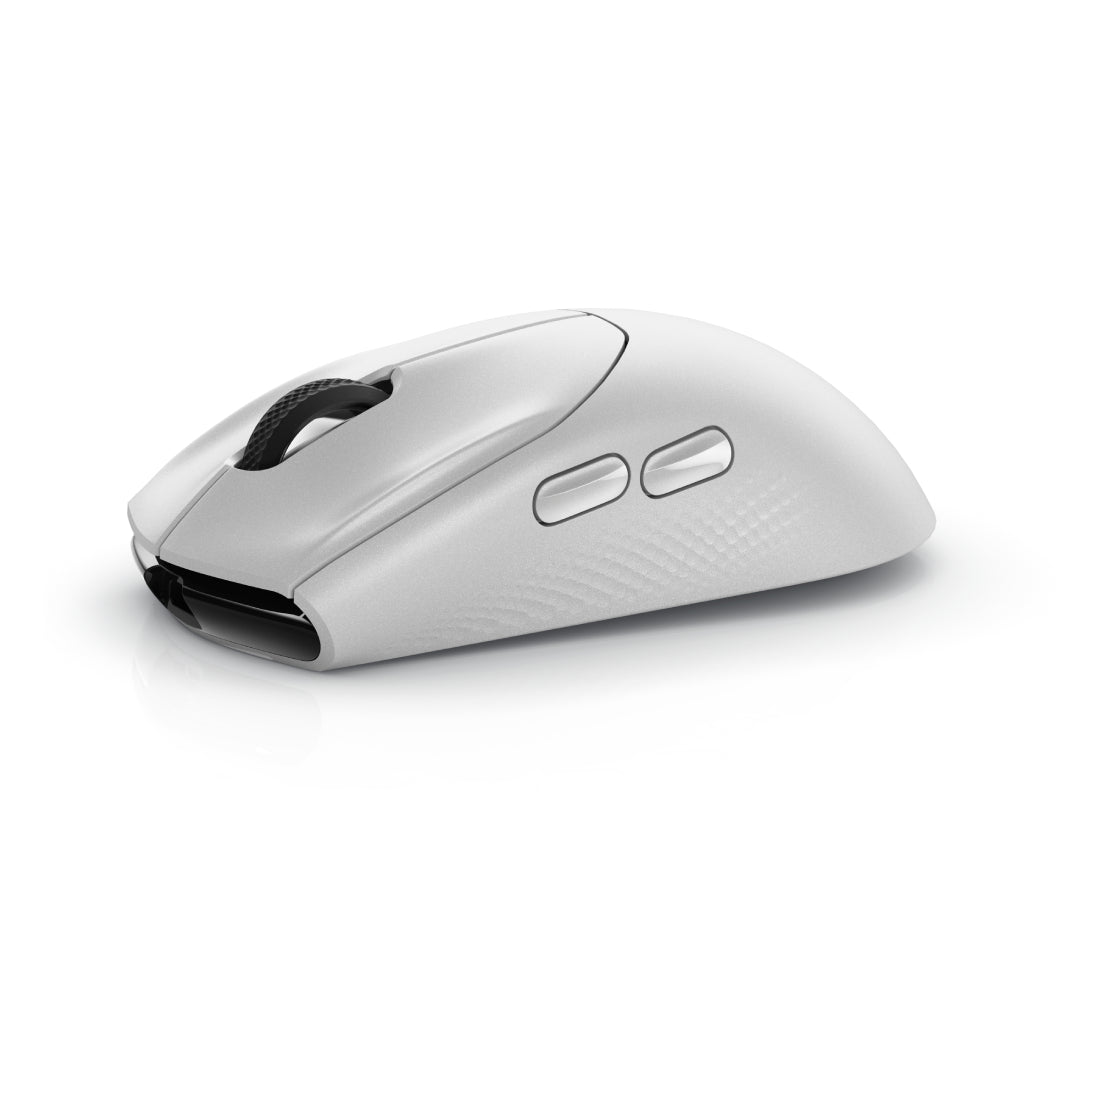 Alienware Tri-Mode AW720M Wireless Gaming Mouse - White - فأرة - Store 974 | ستور ٩٧٤